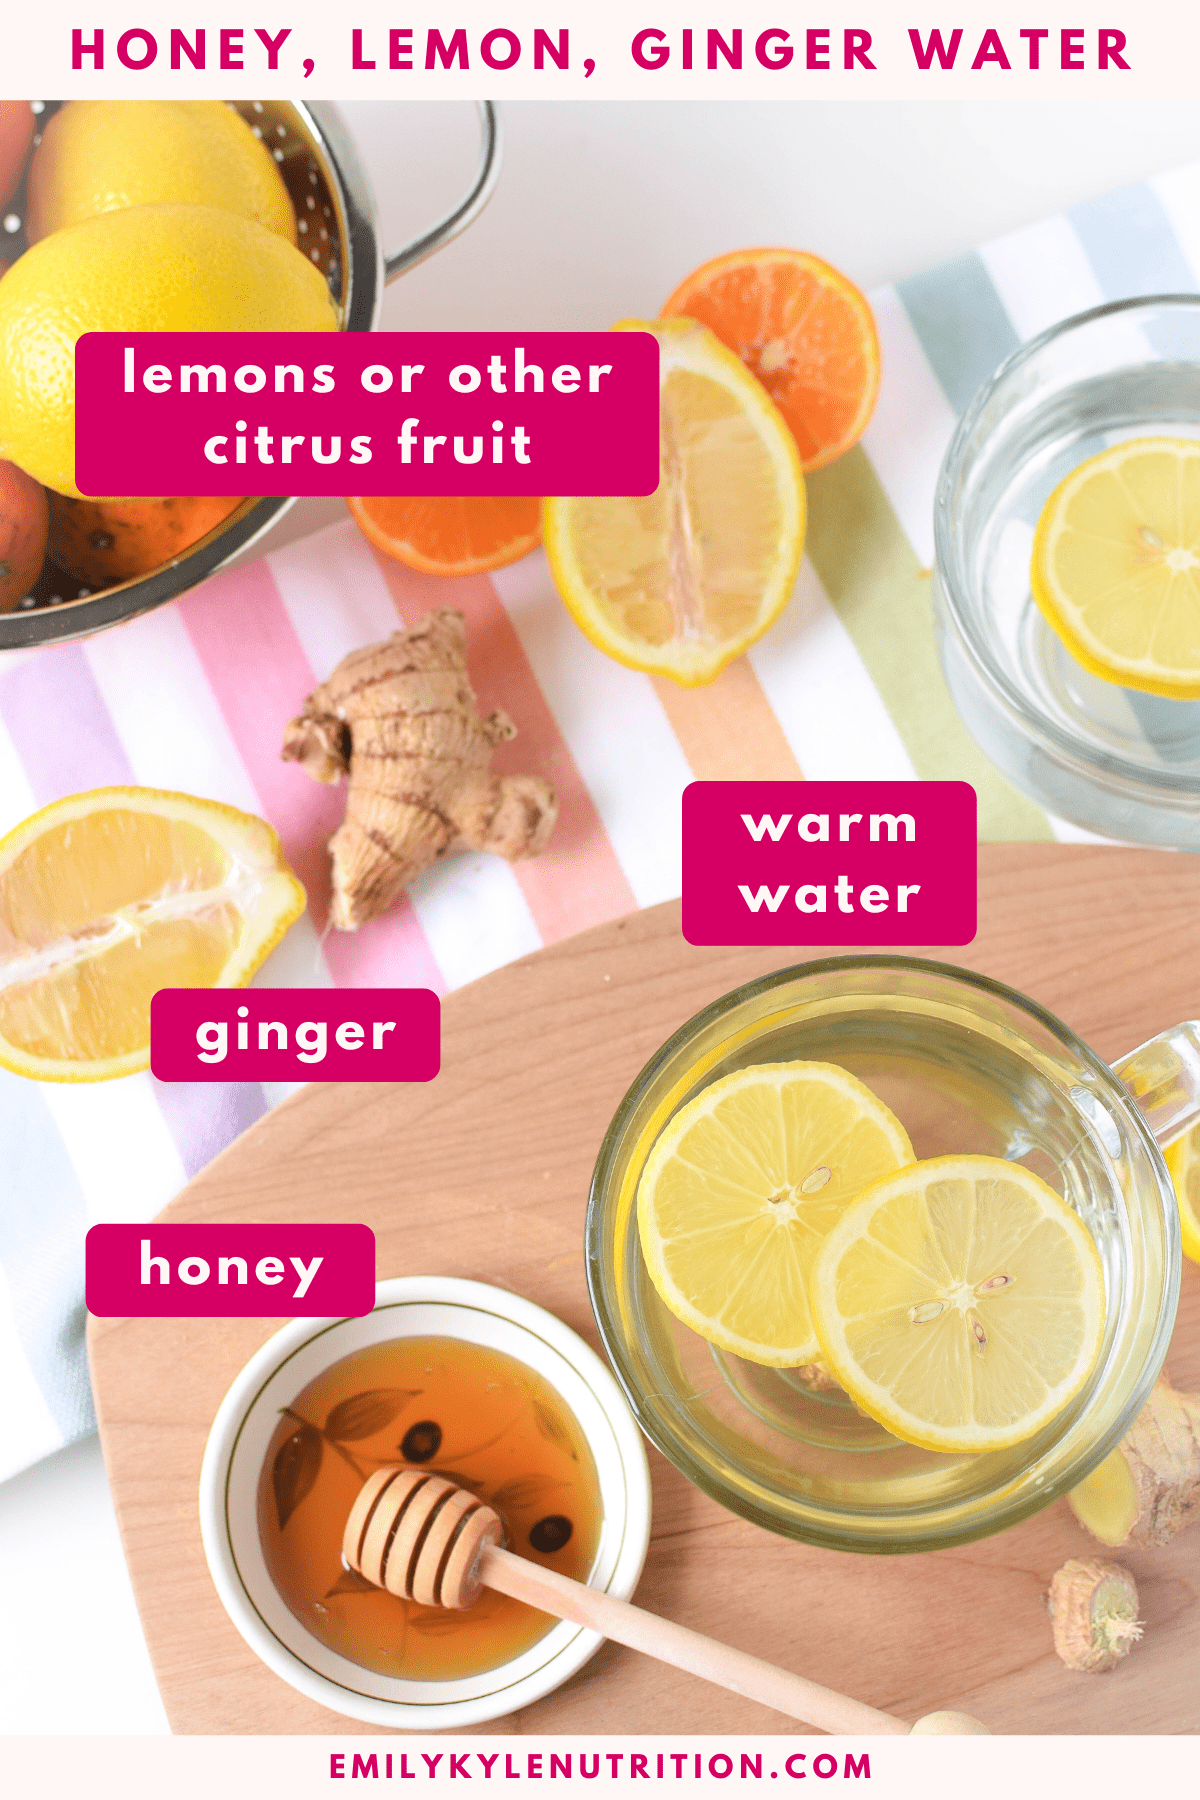 The ingredients needed to make honey, ginger, warm lemon water.